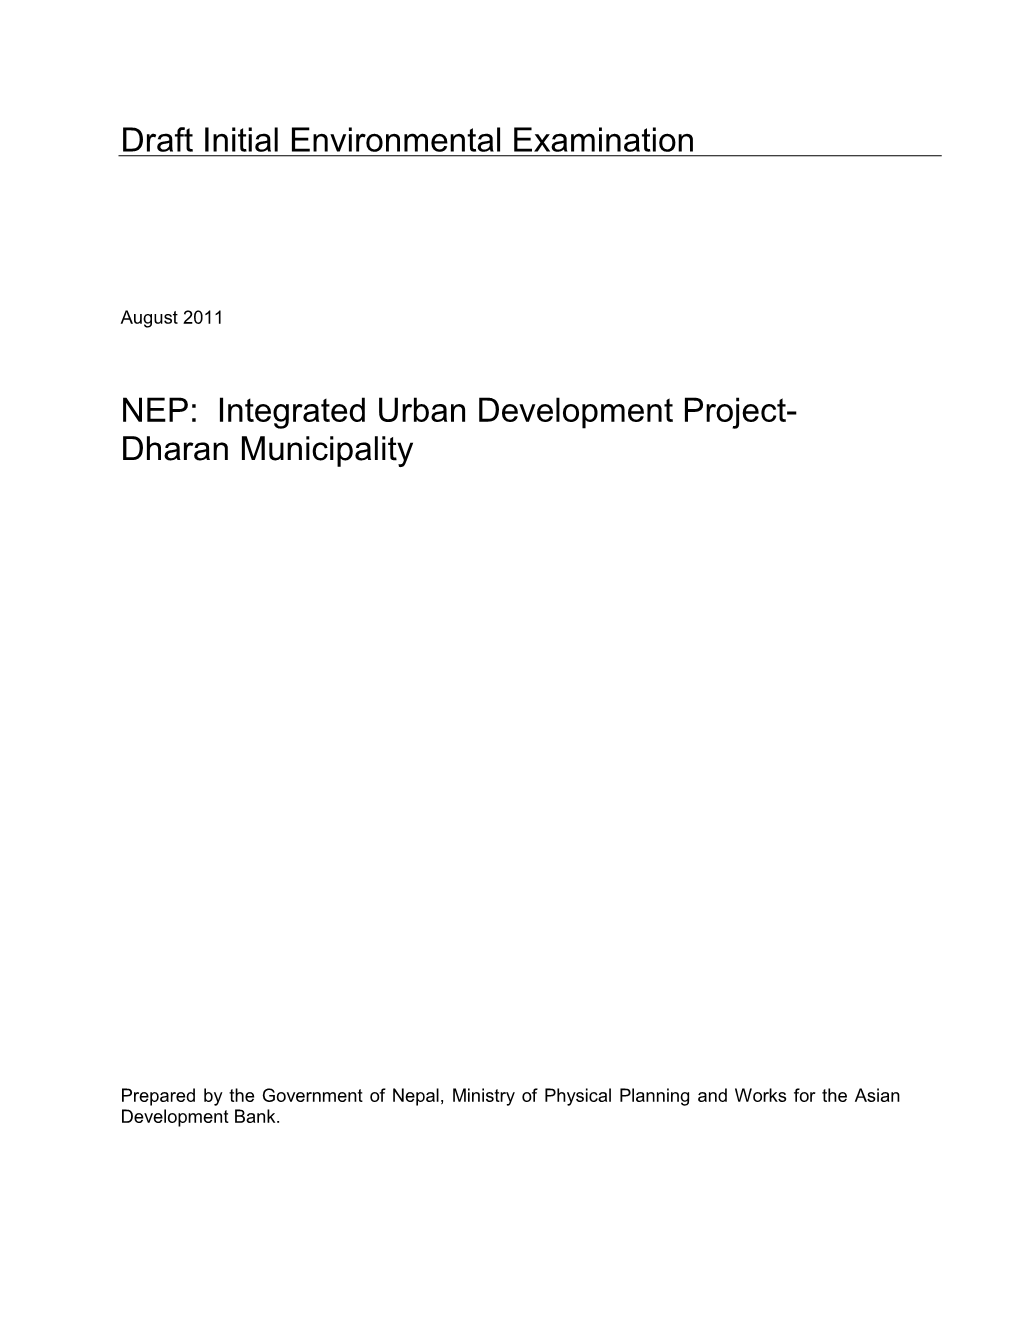 Nepal: Integrated Urban Development Project